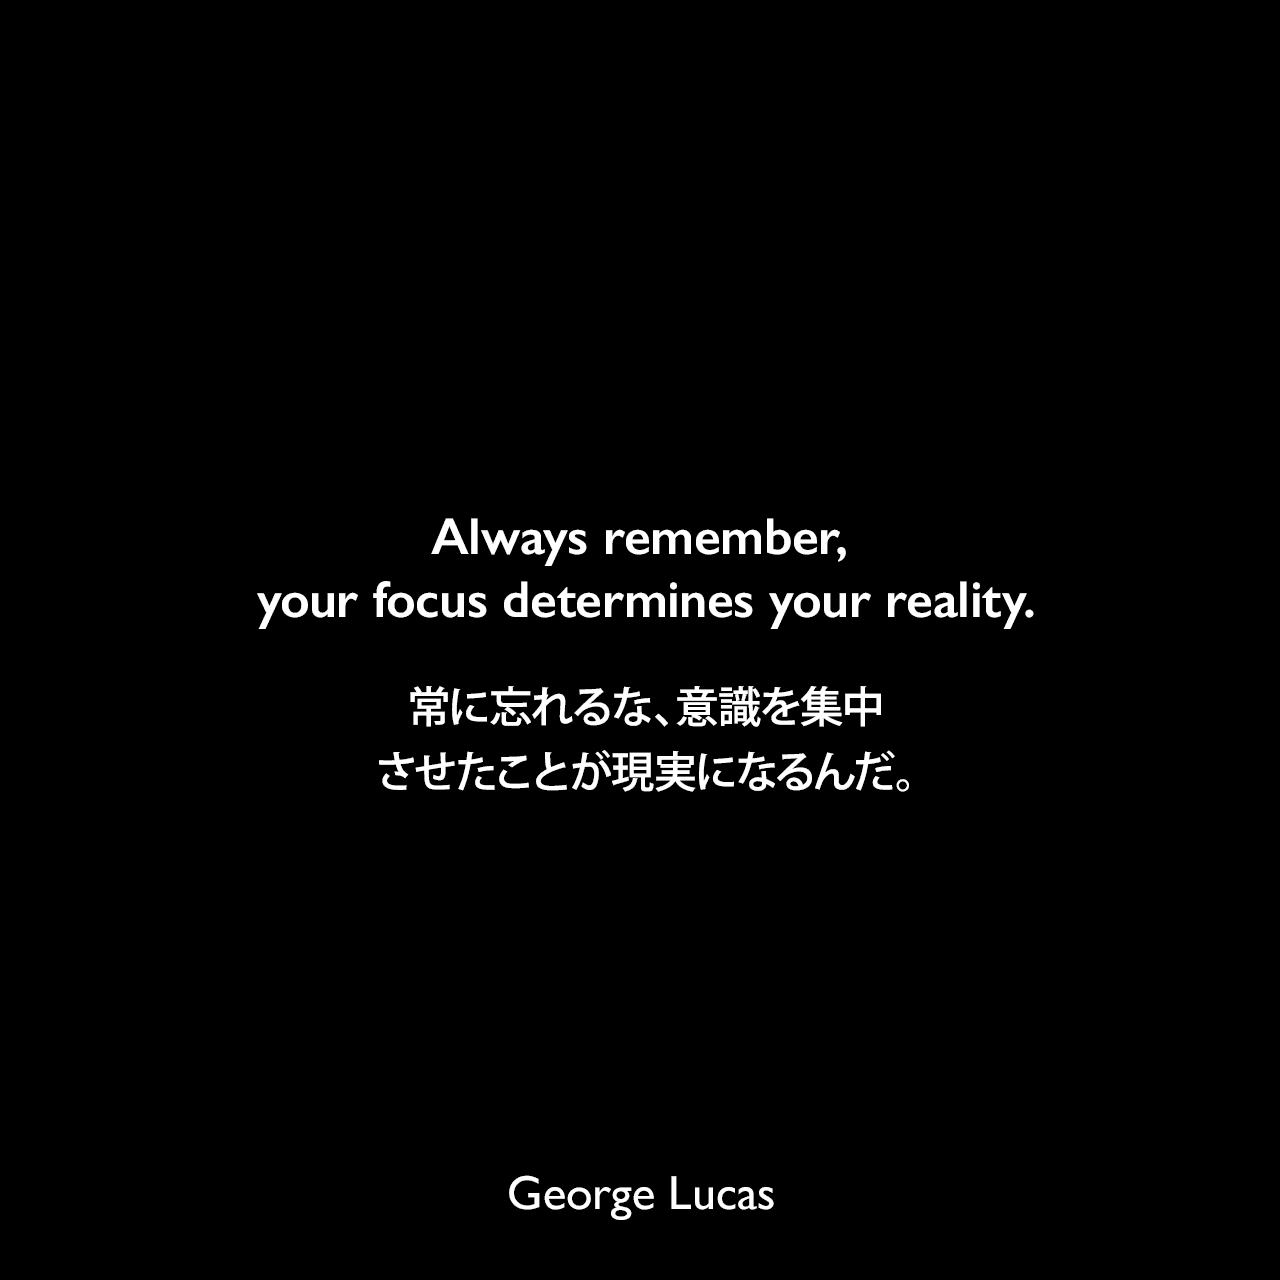 Always remember, your focus determines your reality.常に忘れるな、意識を集中させたことが現実になるんだ。- クワイ=ガン・ジンがアナキンに言った言葉（Star Wars: Episode I - The Phantom Menace ファントム・メナス）よりGeorge Lucas